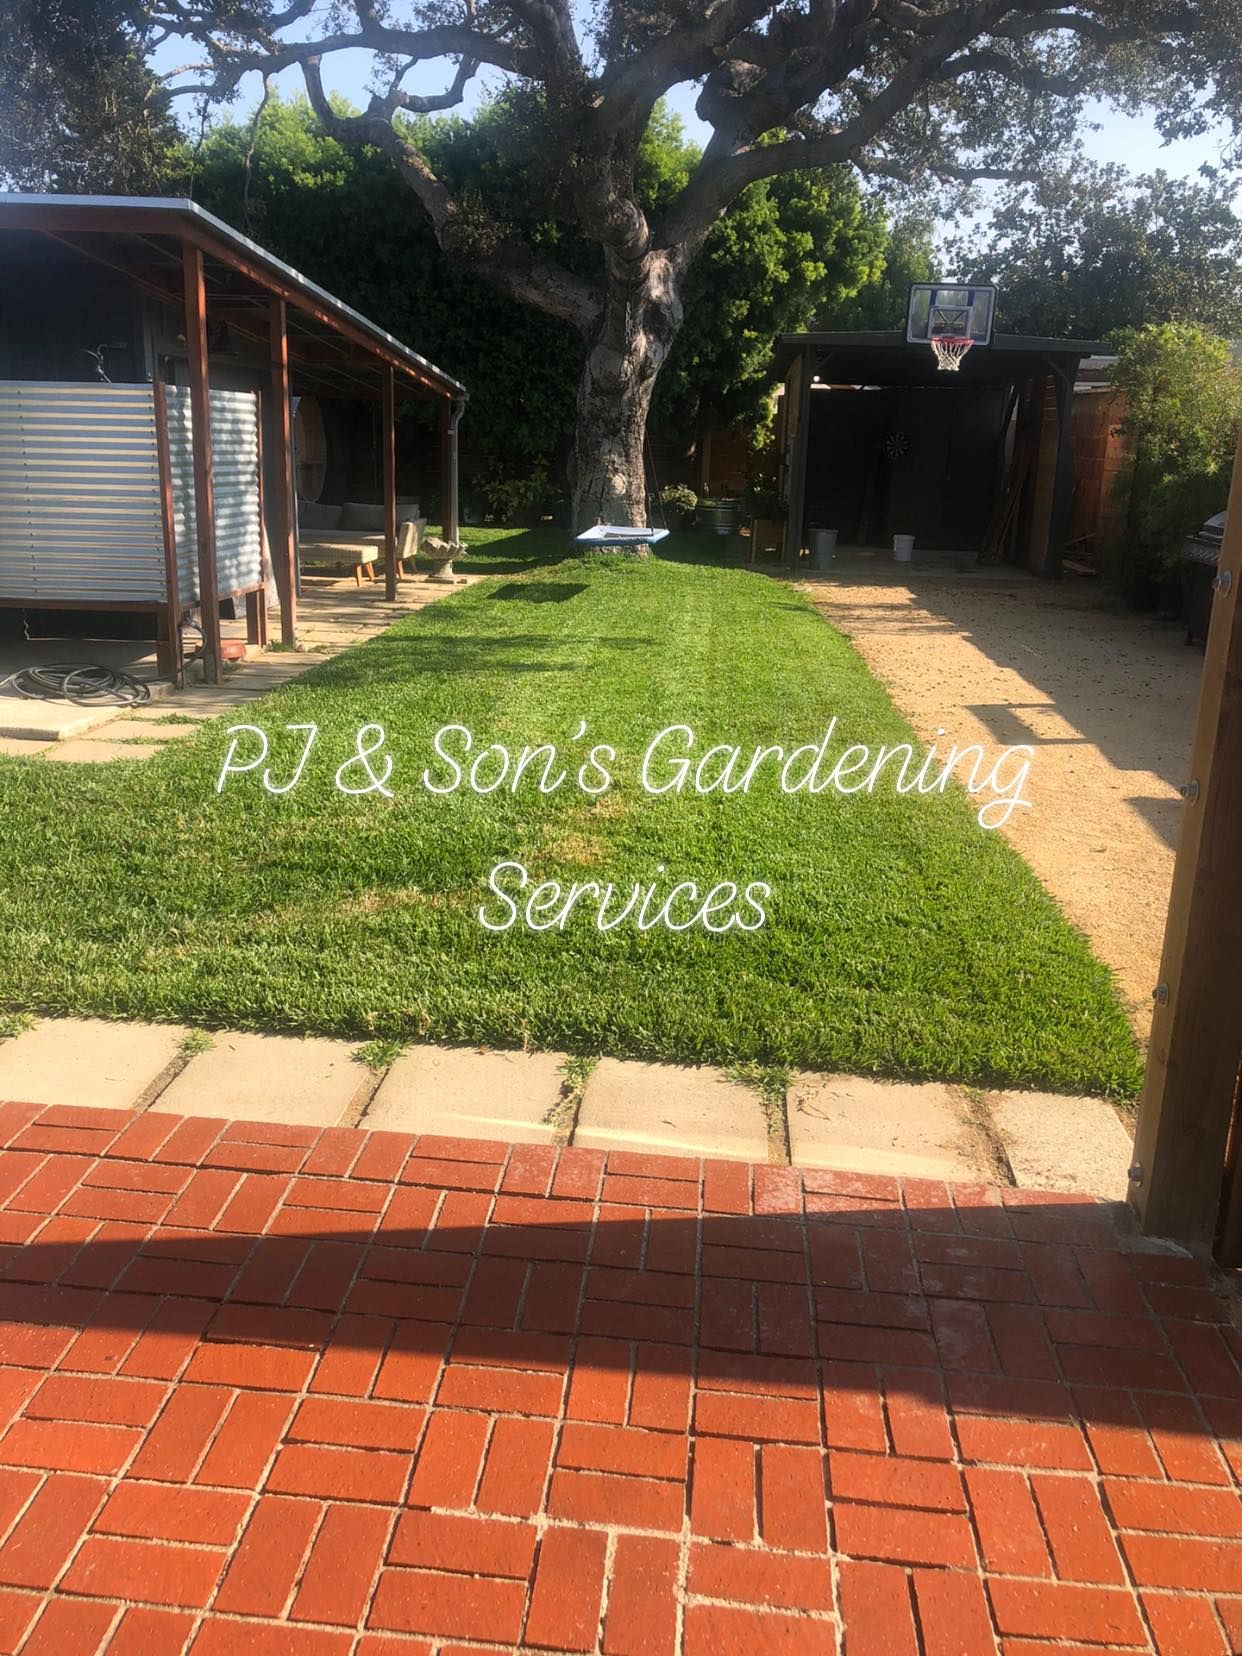  for PJ & Son’s Gardening in Montecito, CA